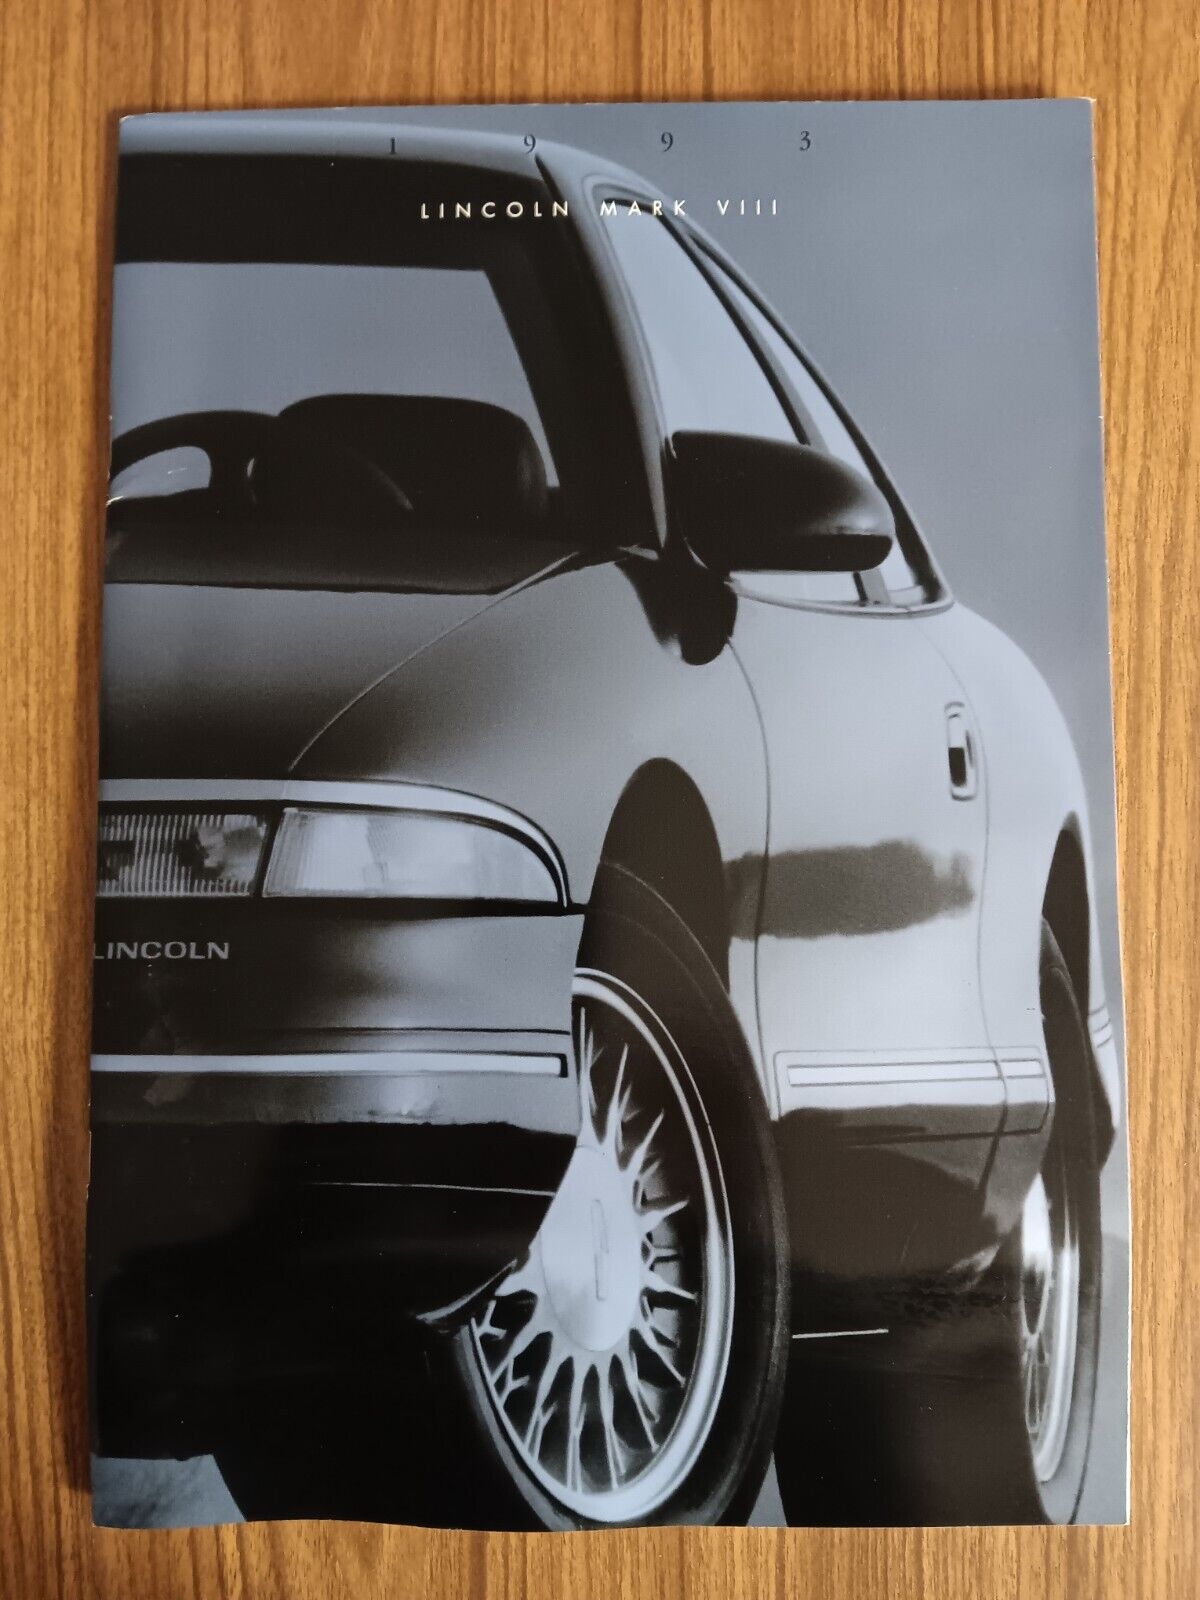 1993 Lincoln Mark VIII Dealership Advertising Brochure